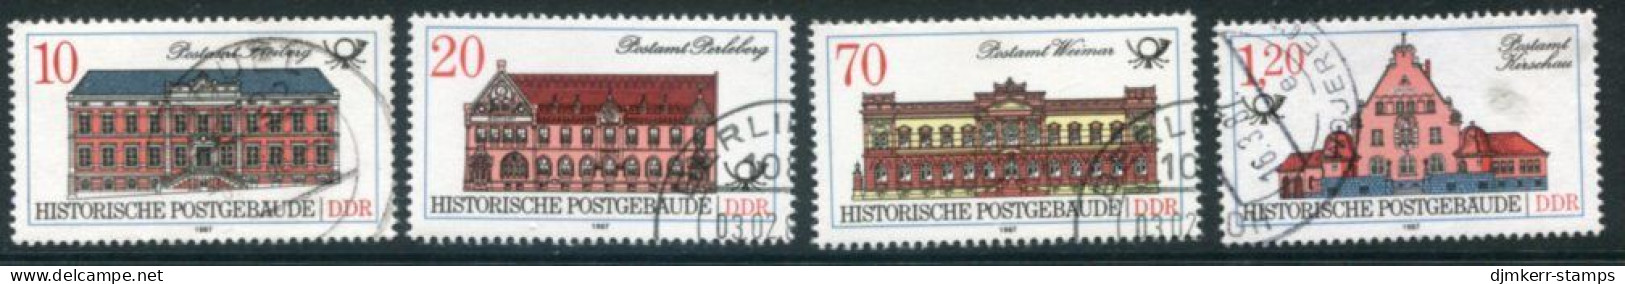 DDR 1987 Historic Postal Buildings Singles Used.  Michel 3067-70 - Usati